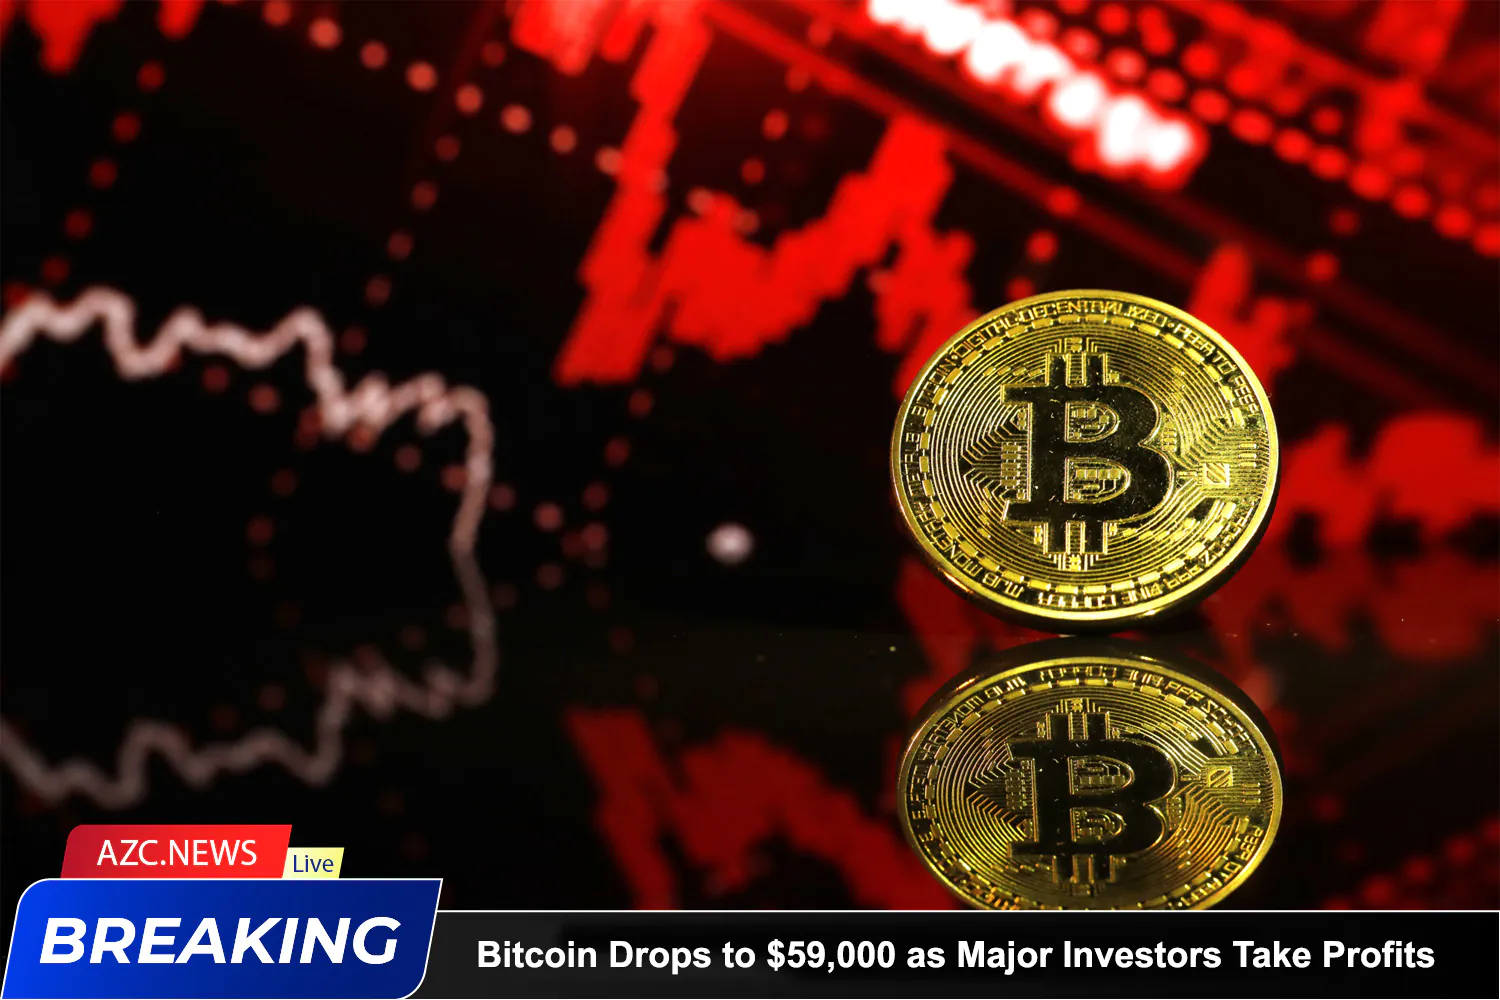 Azcnews Breaking Bitcoin Drops To $59,000 As Major Investors Take Profits